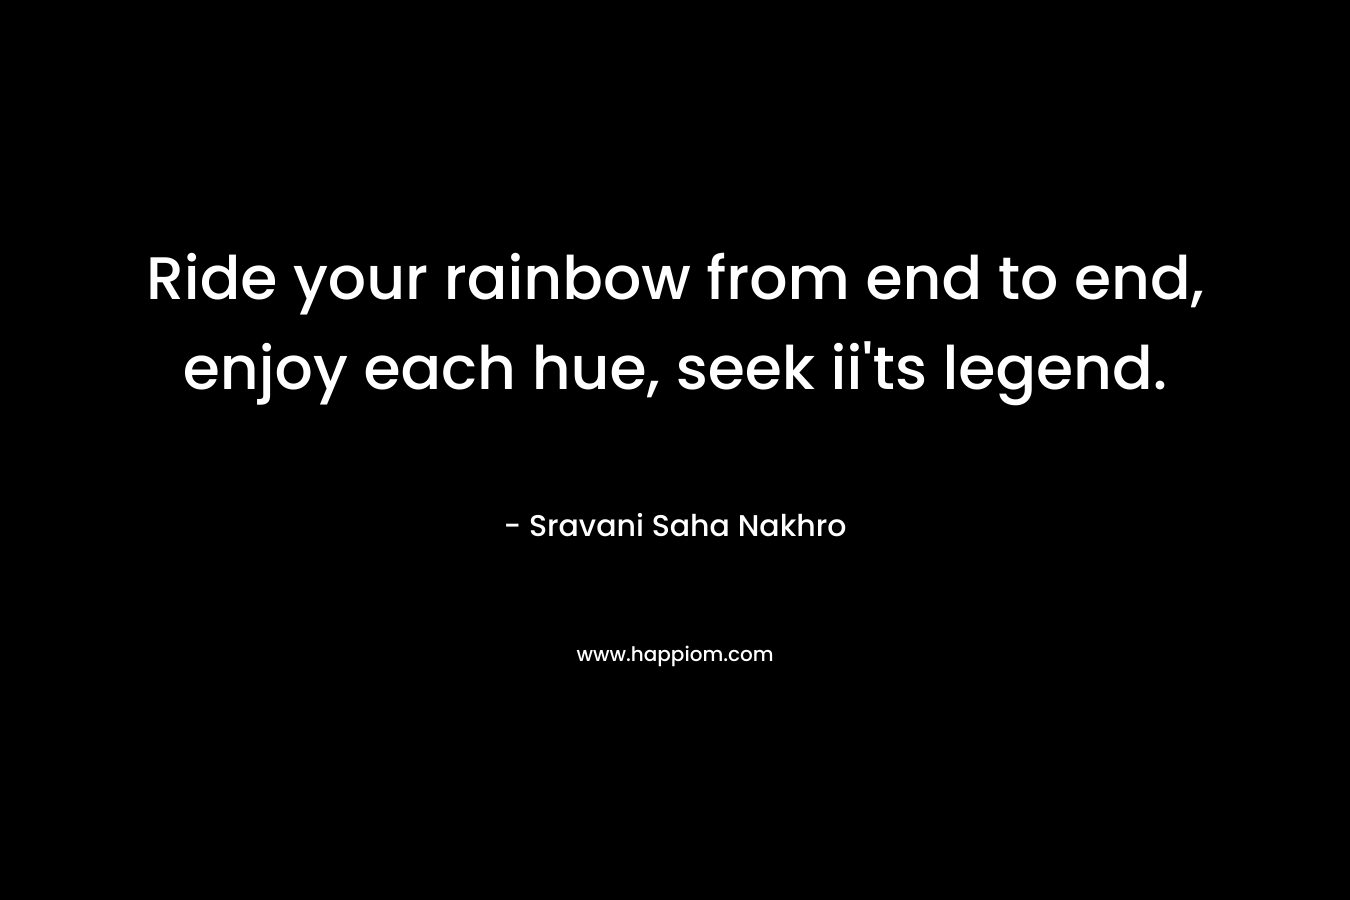 Ride your rainbow from end to end, enjoy each hue, seek ii’ts legend. – Sravani Saha Nakhro